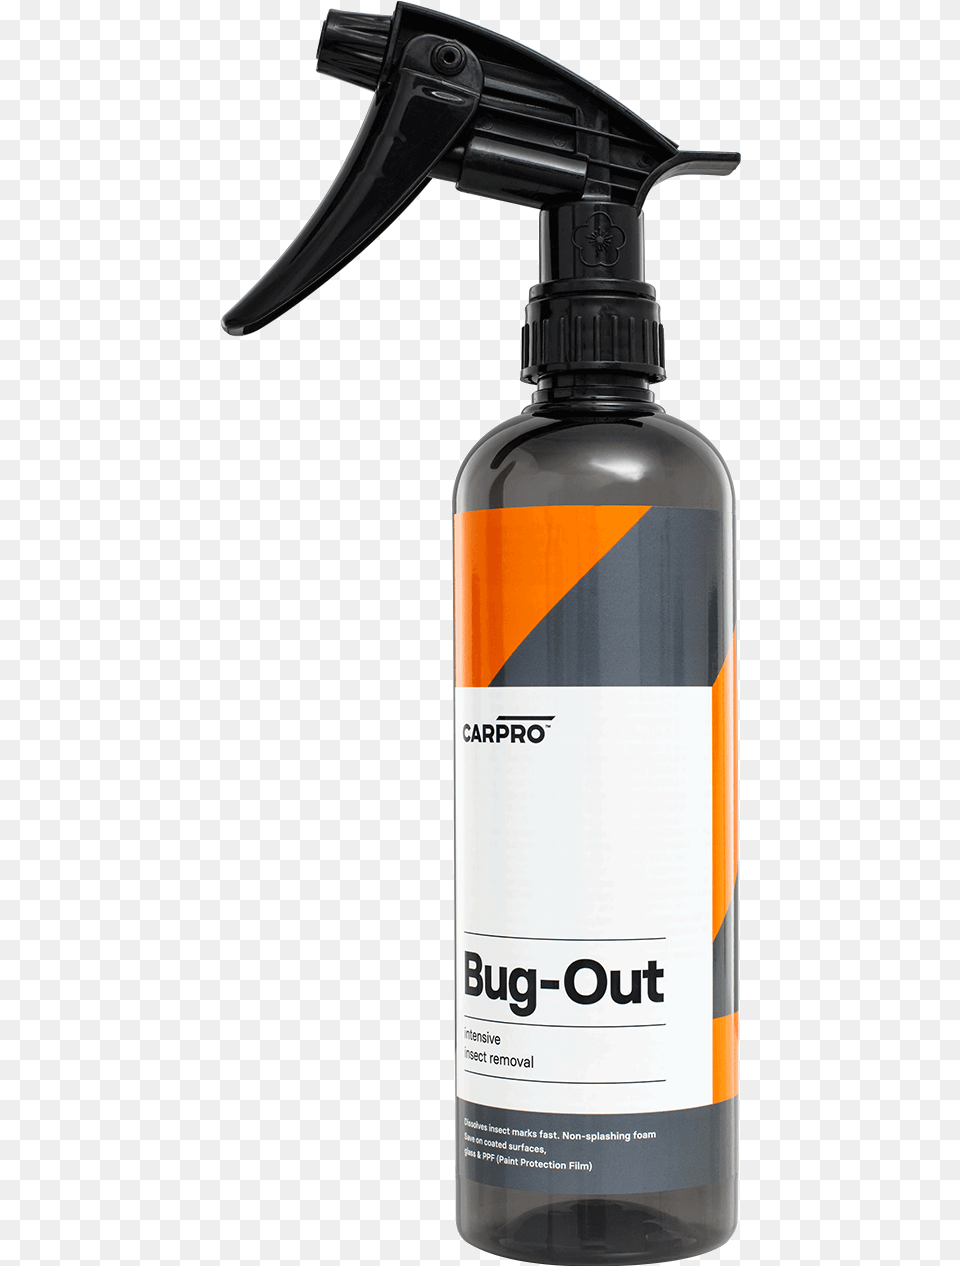 Carpro Eraser Intense Oil Amp Polish Cleanser, Bottle, Can, Spray Can, Tin Png Image